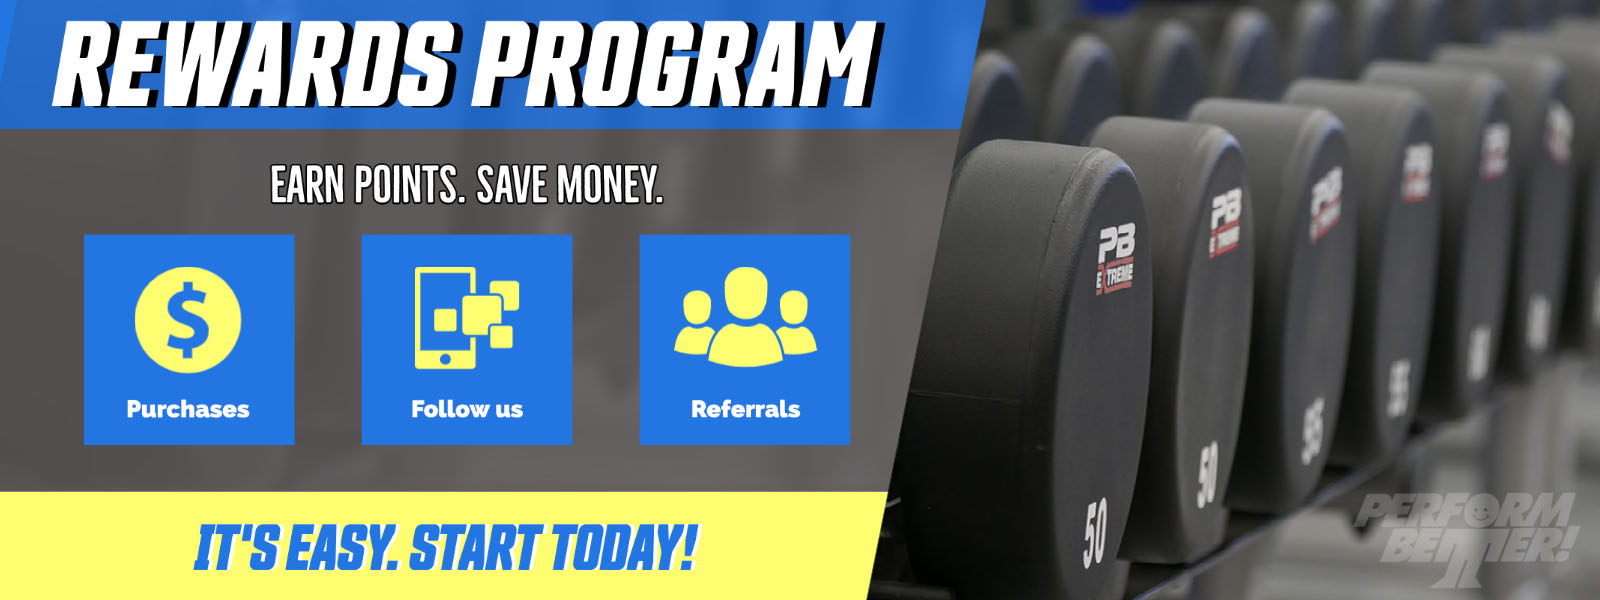 Rewards Program. Earn Points. Save Money. It's Easy!